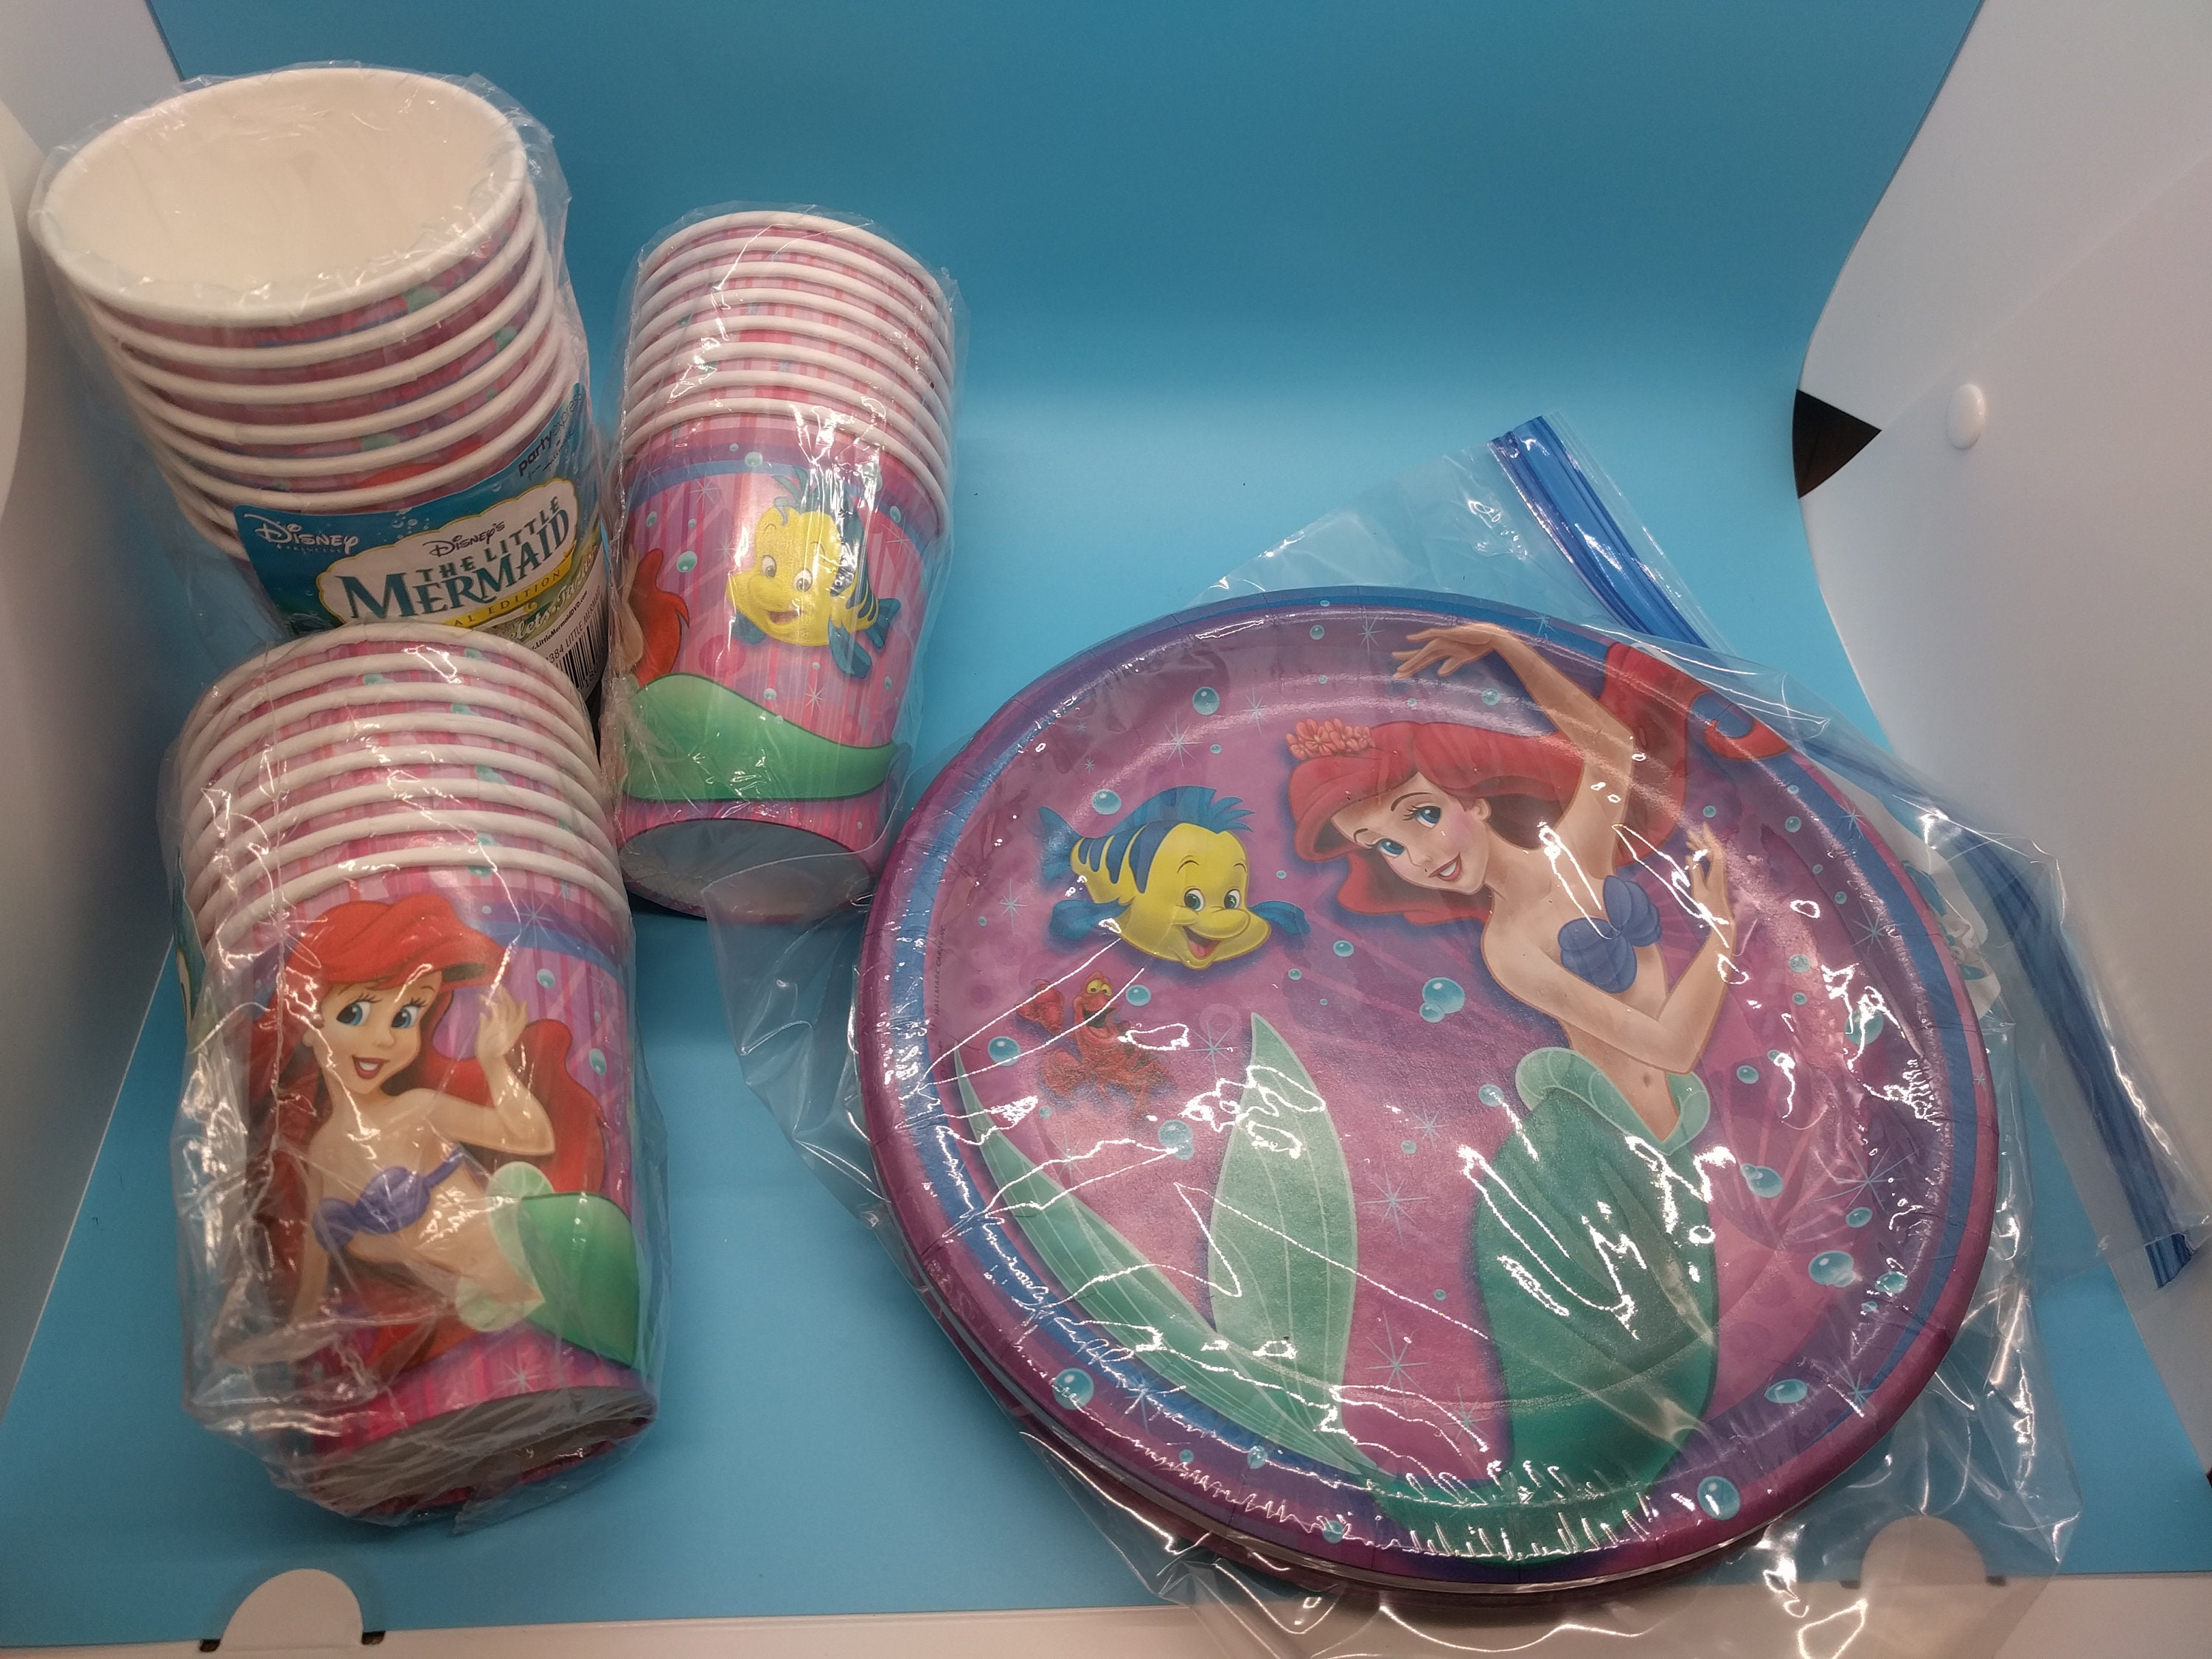 Little Mermaid Ariel 9 oz Paper Cups 8 ct